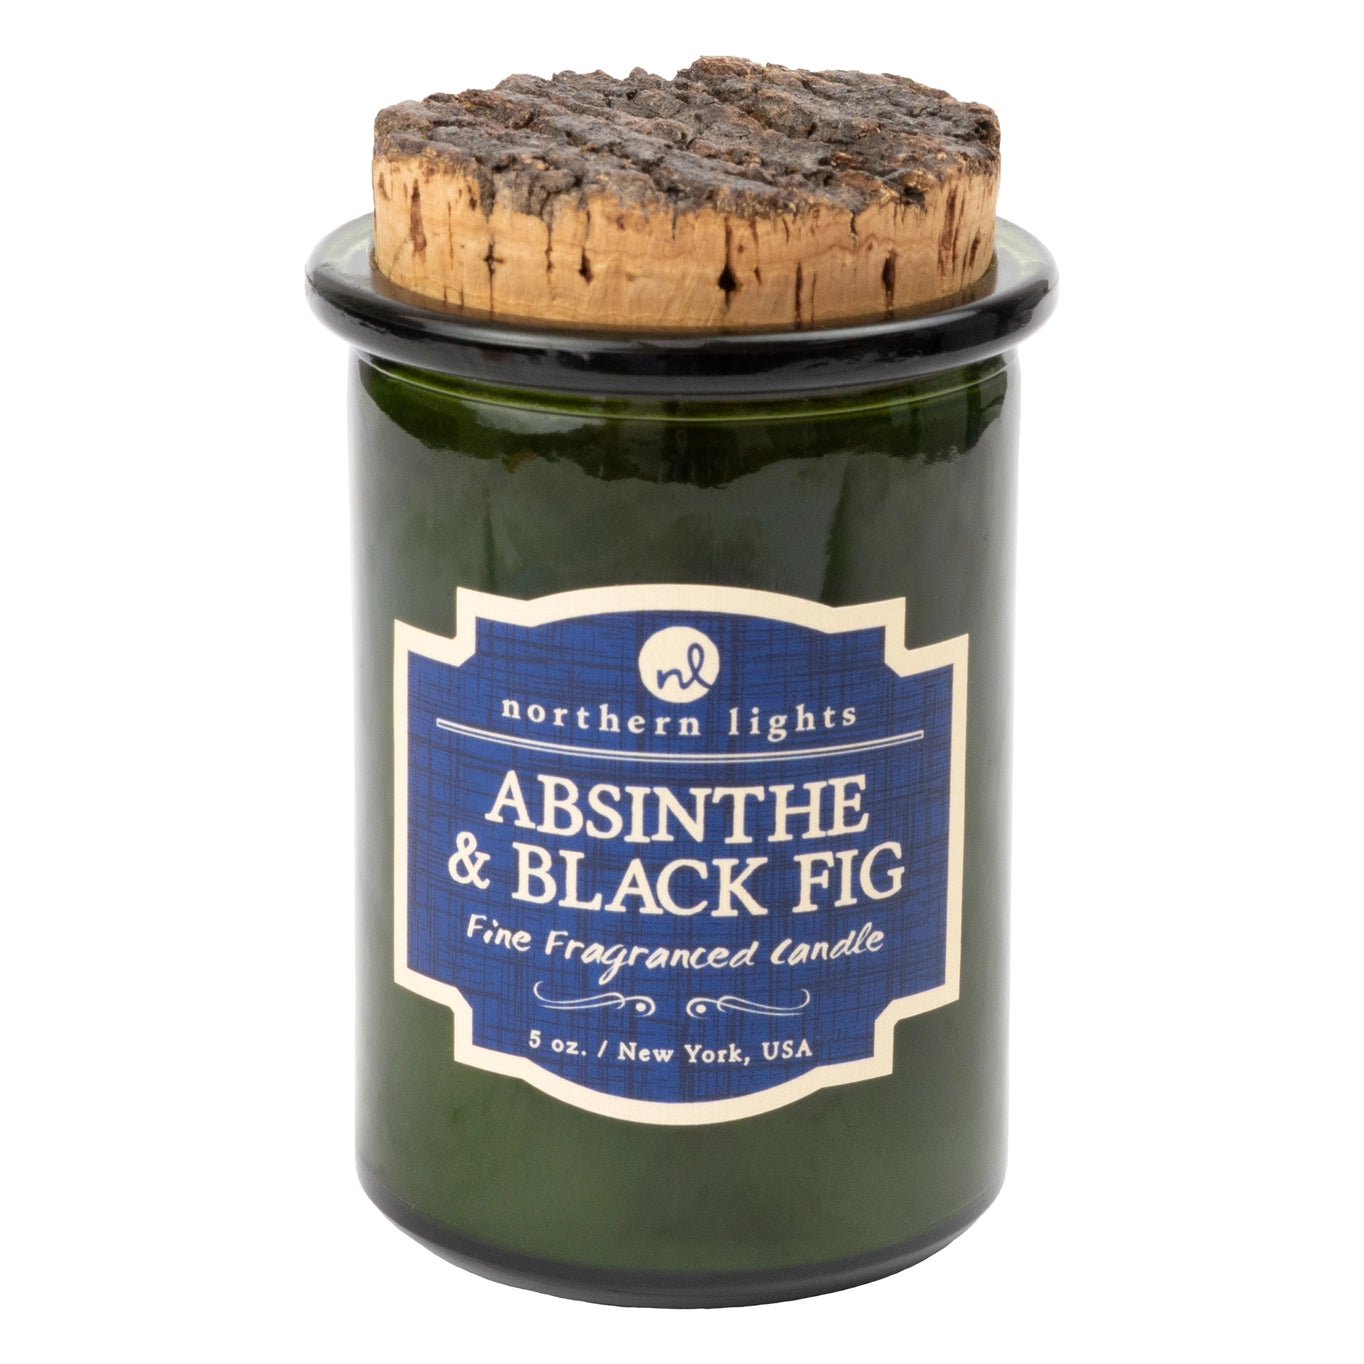 Absinthe & Black Fig Candle